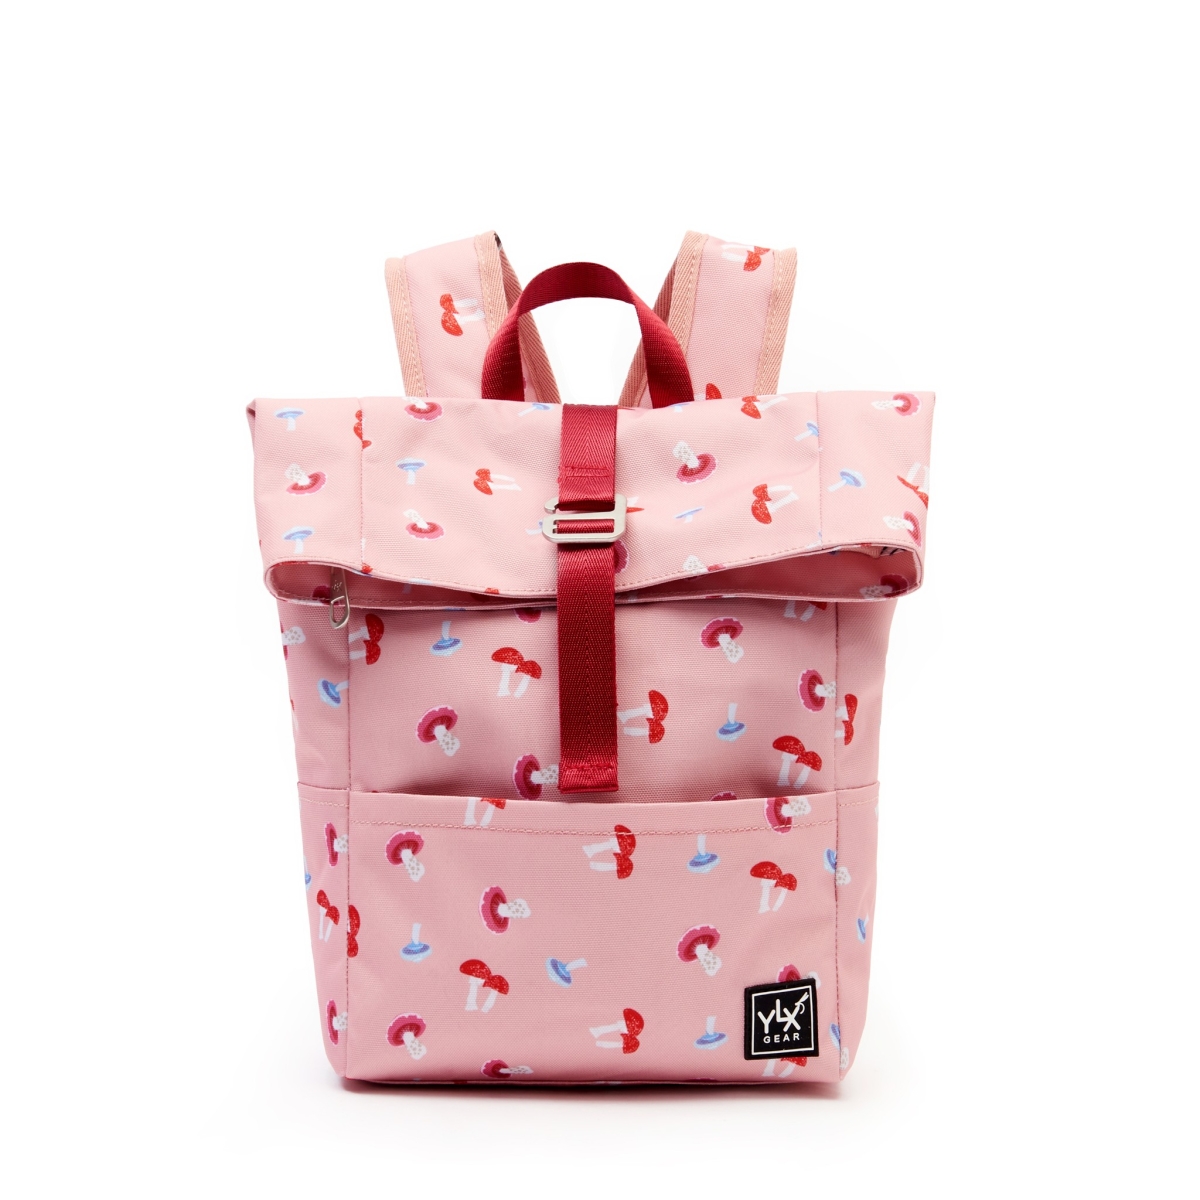 YLX Original Backpack - Kids | Old Pink & Mushrooms